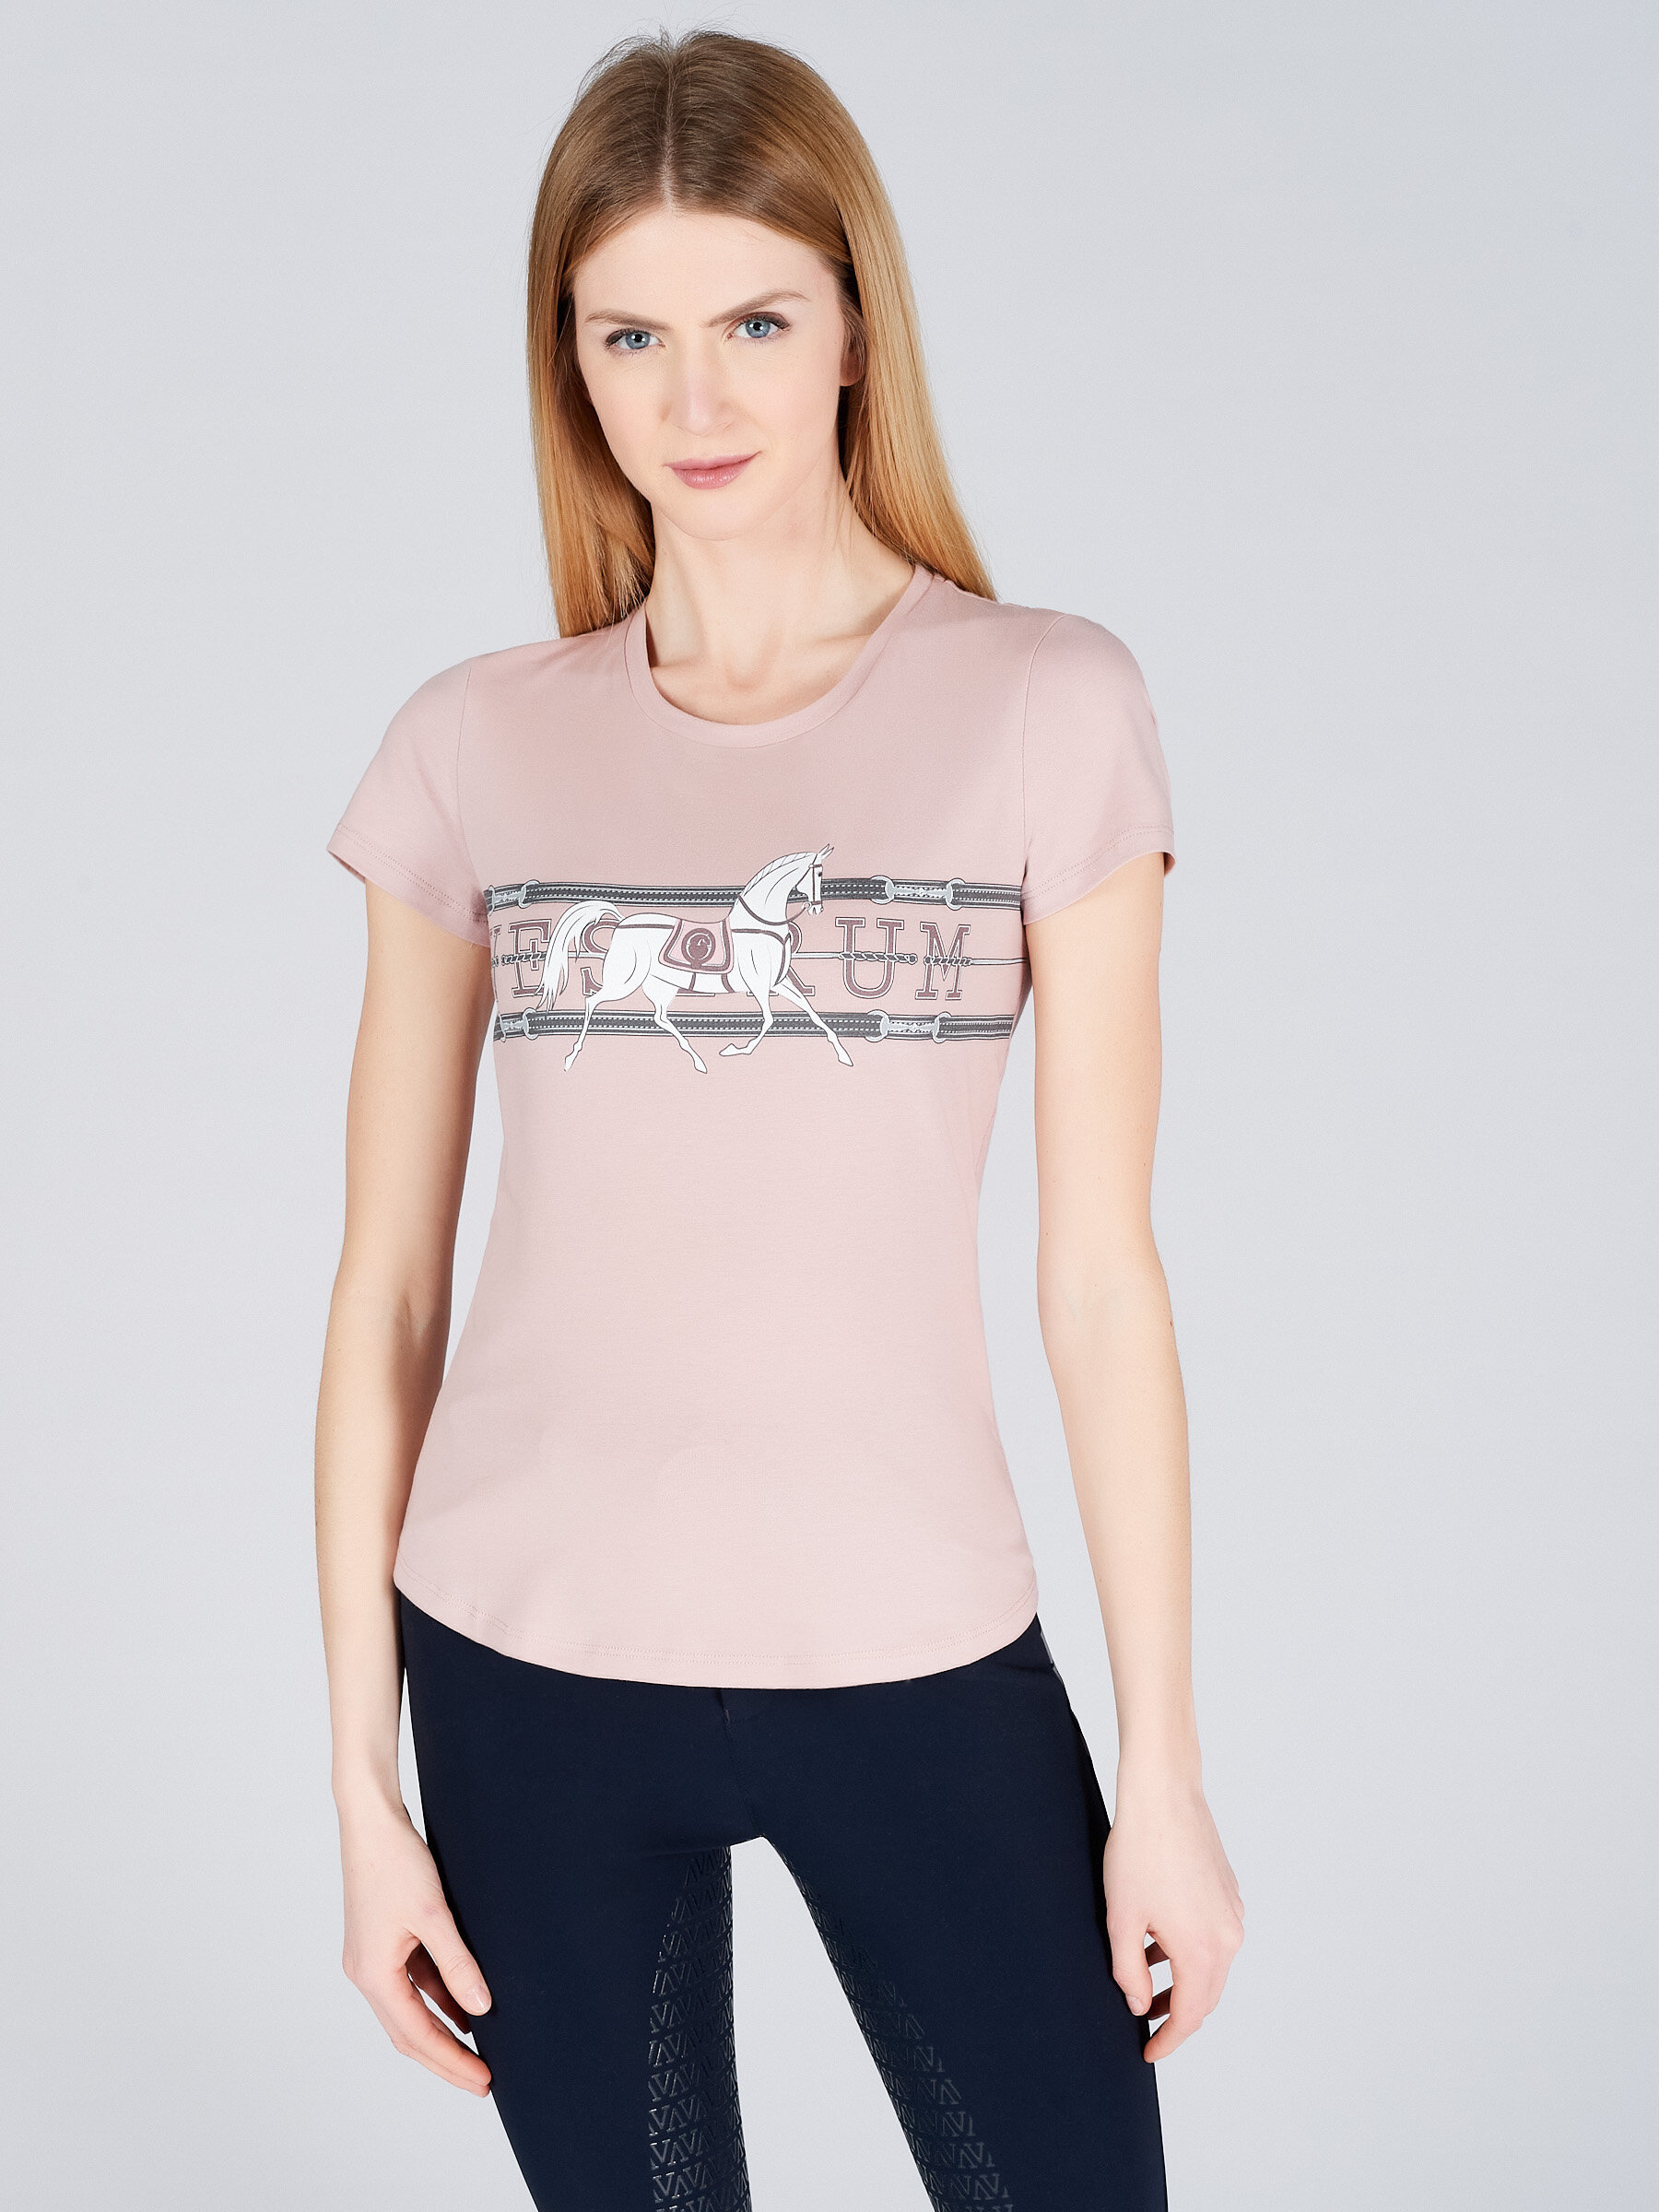 Dalian T-Shirt - Powder Pink